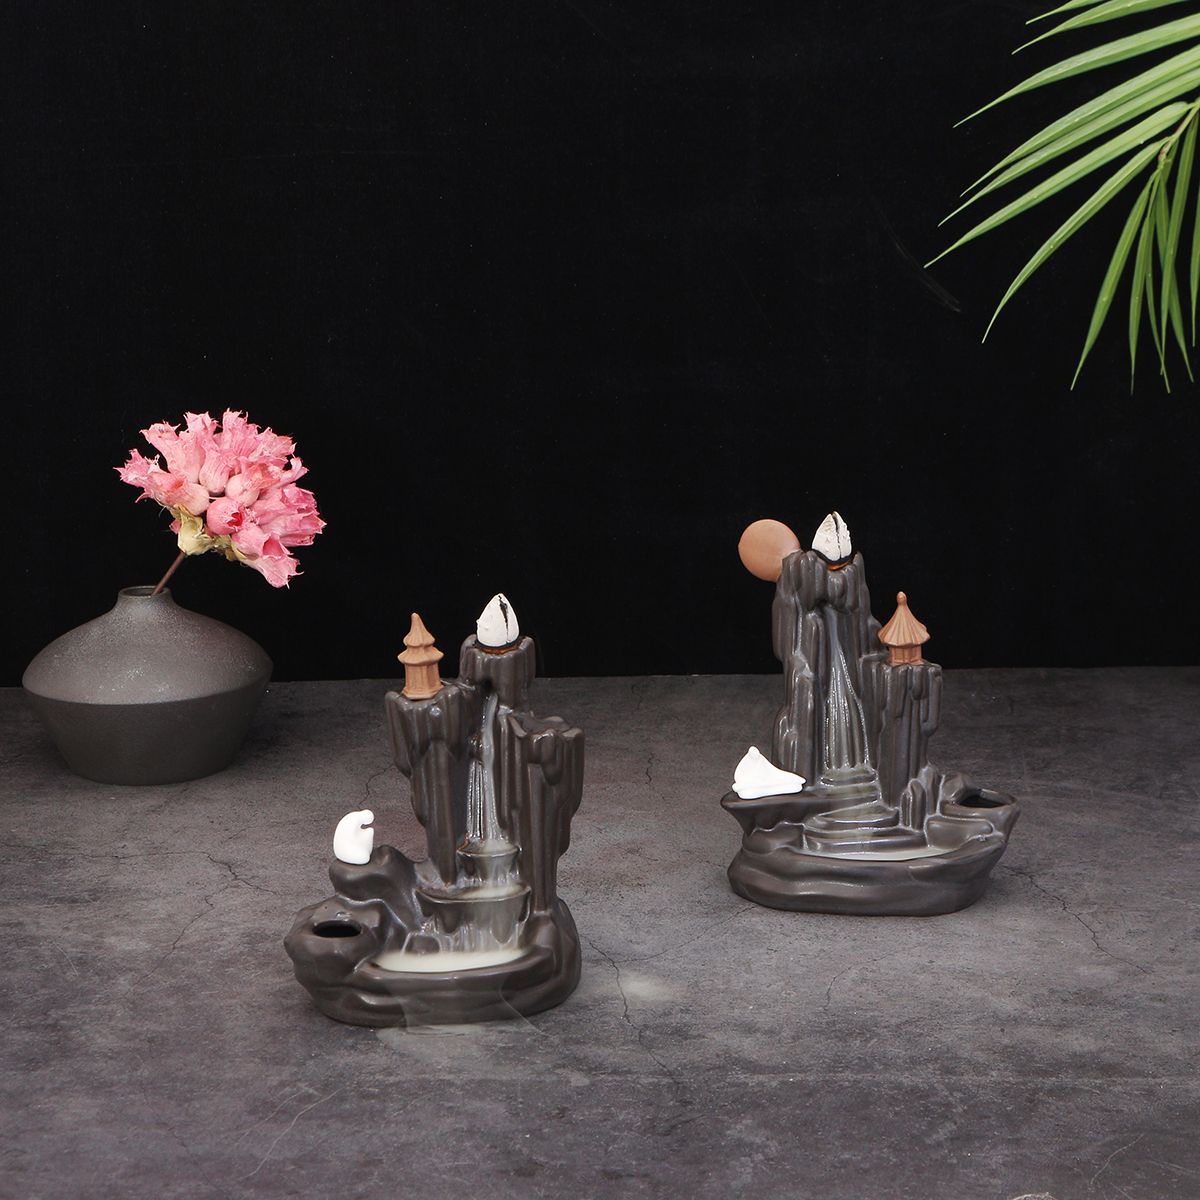 Ceramic-Incense-Holder-Burner-Backflow-Incense-Burner-Waterfall-Holder-Home-Decorations-With-10-cone-1555265